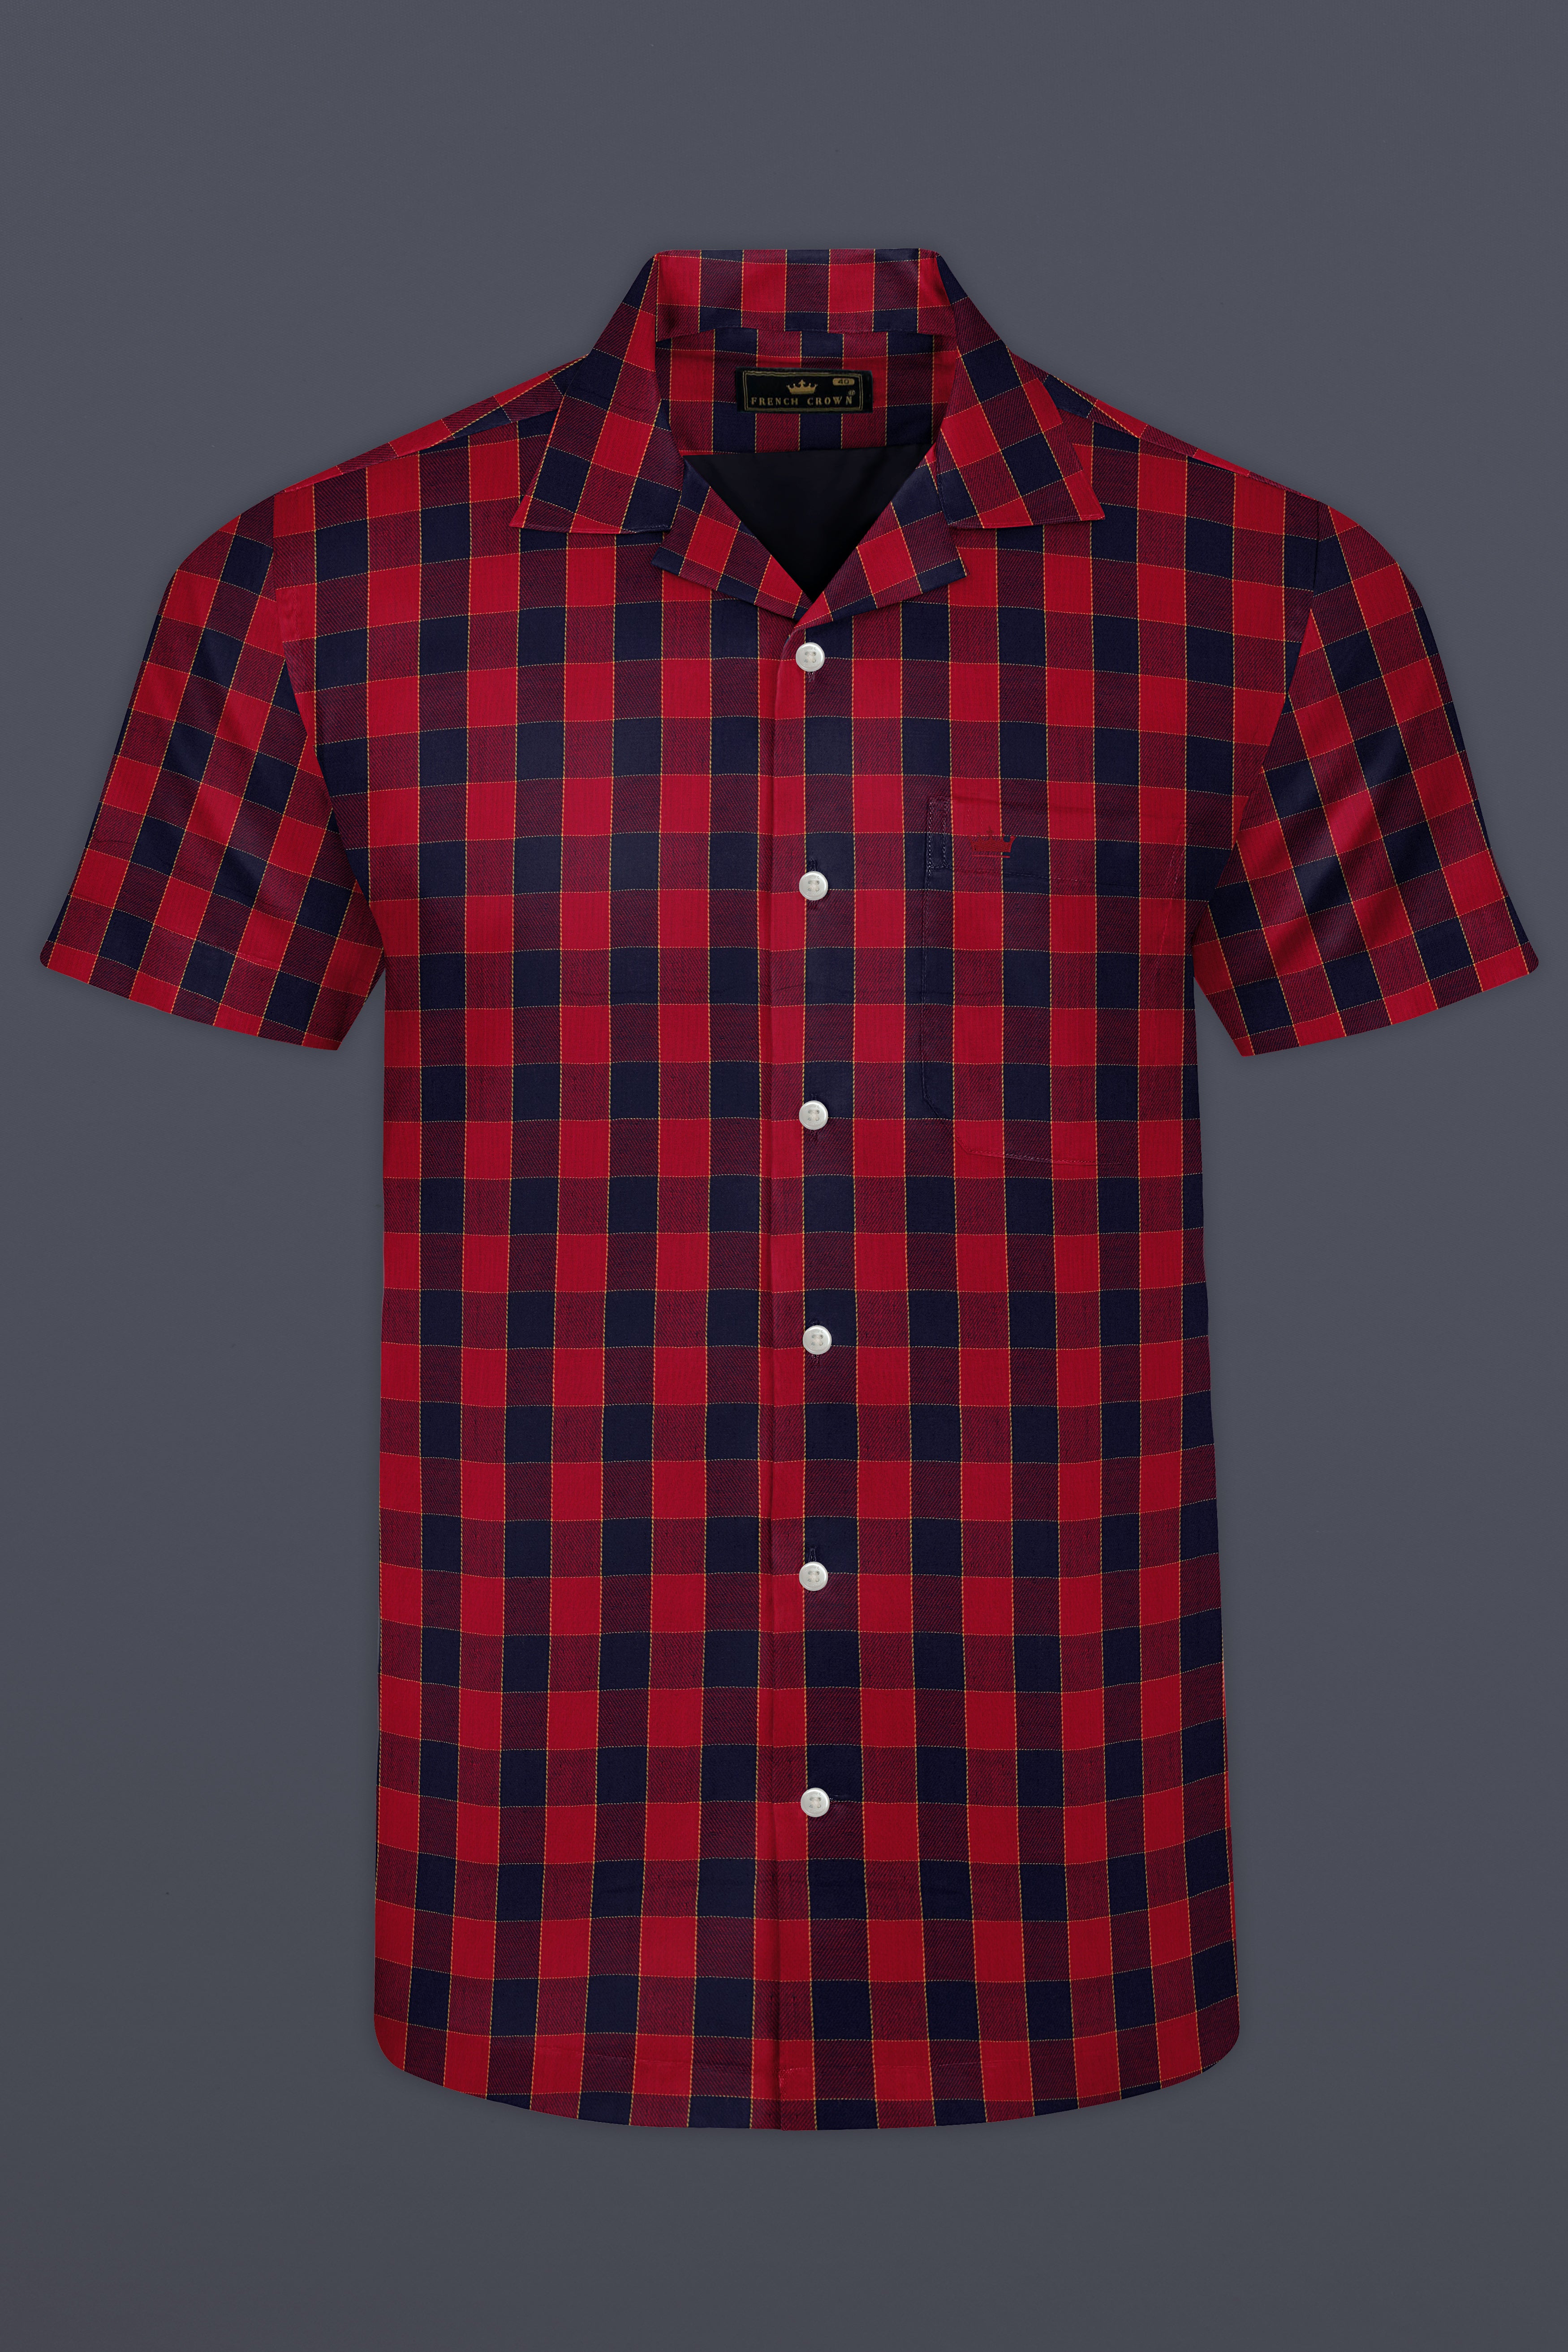 Shiraz Red and Haiti Blue Twill Checkered Premium Cotton Shirt